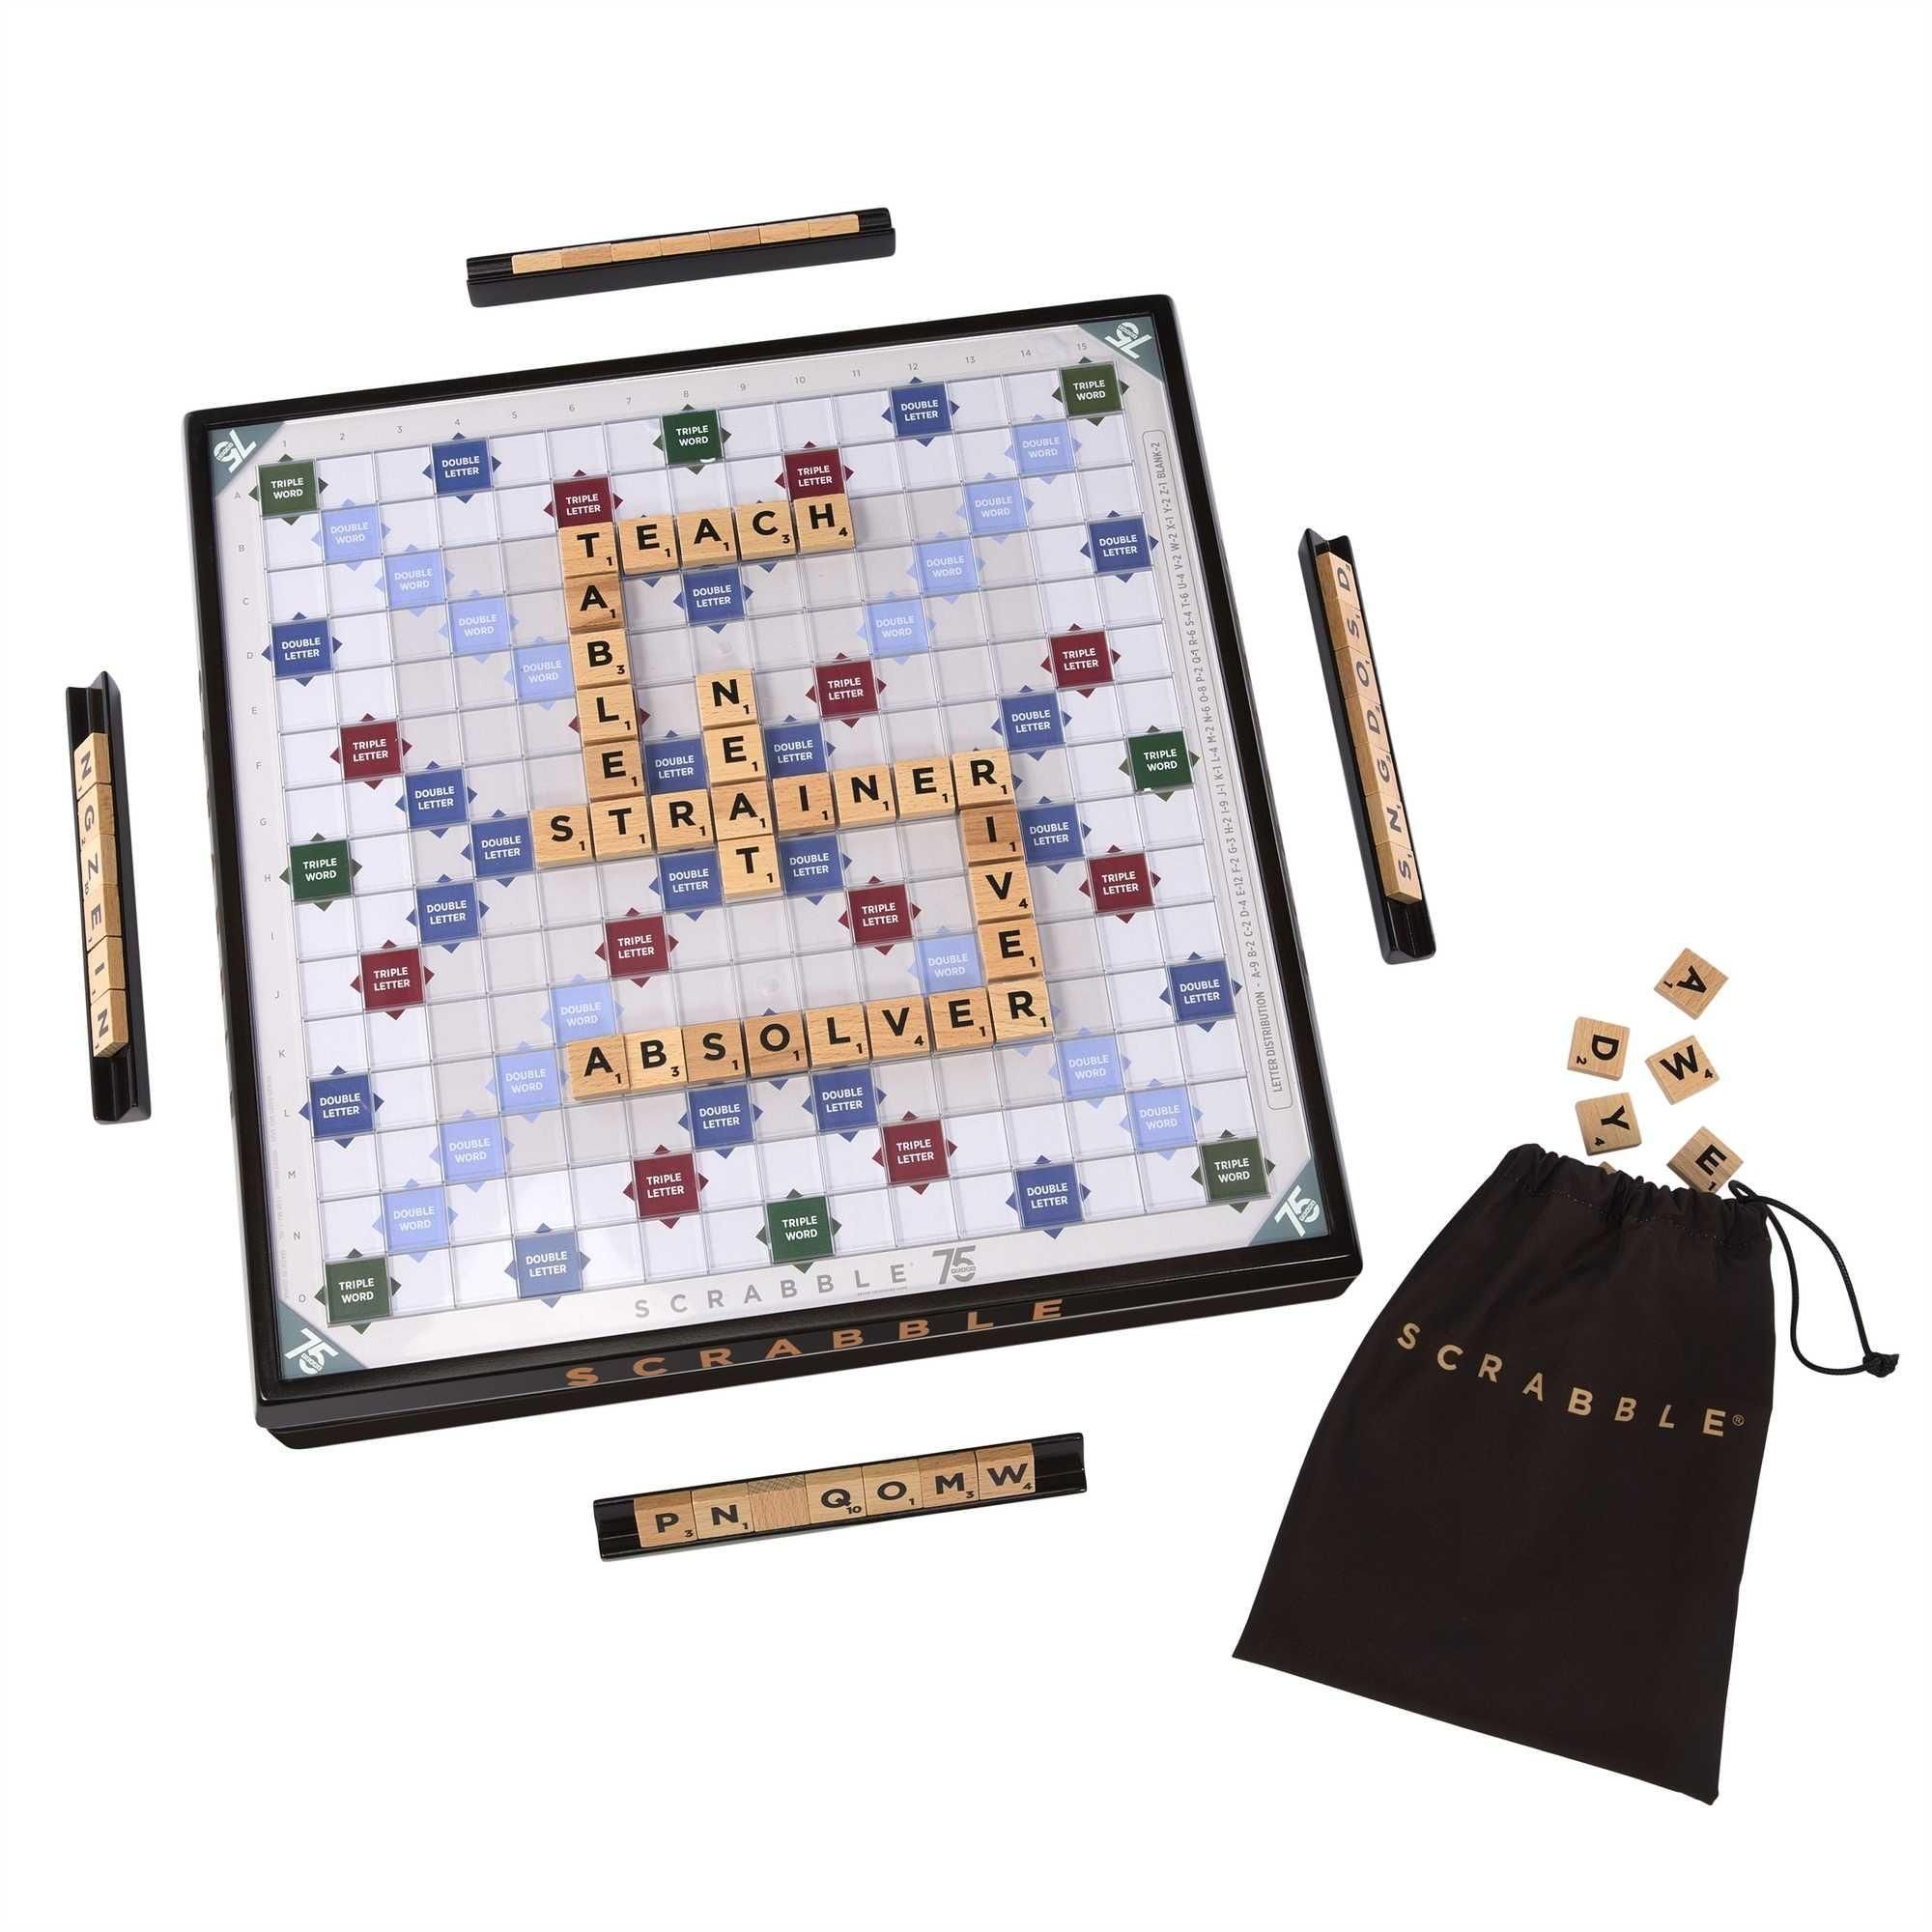 Scrabble: 75th Anniversary (EN)